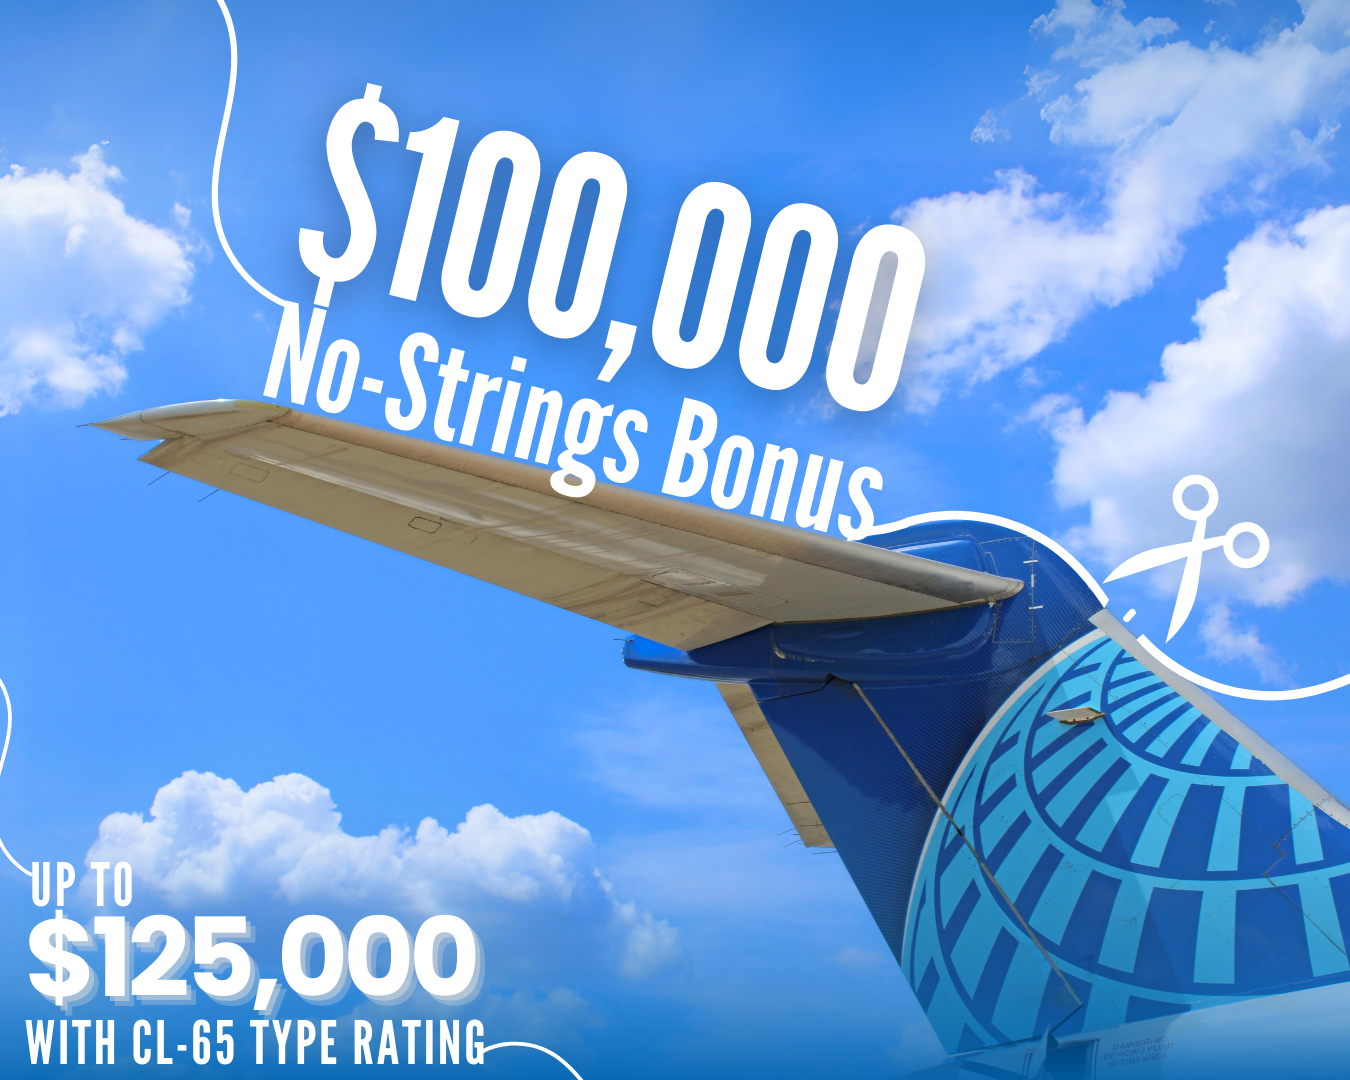 $100,000 No-Strings Bonus